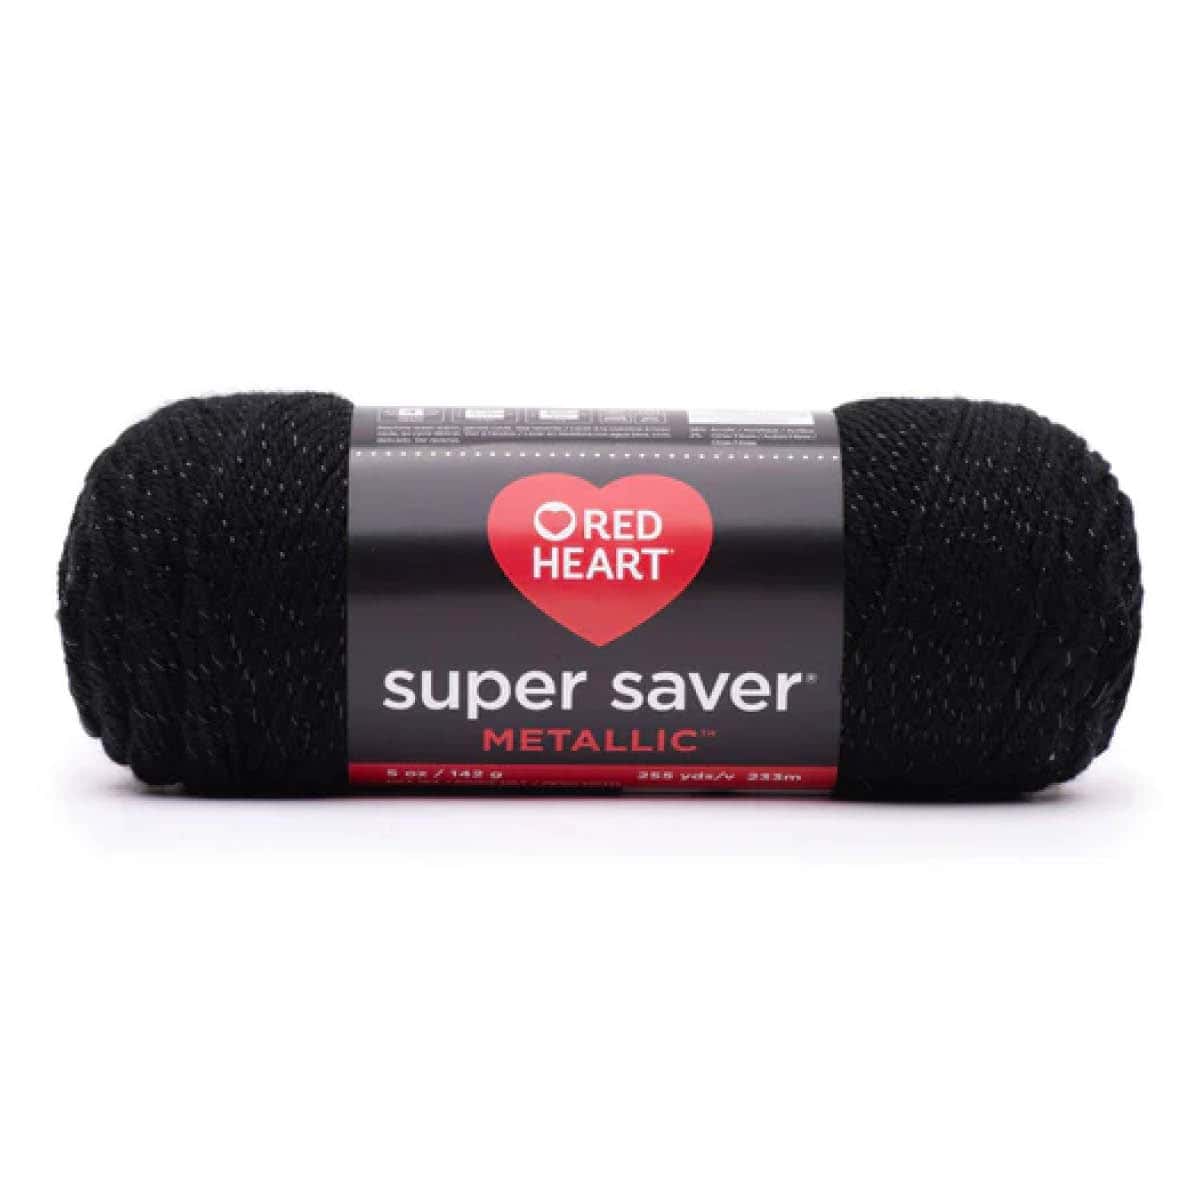 Red Heart Super Saver Metallic Yarn Product